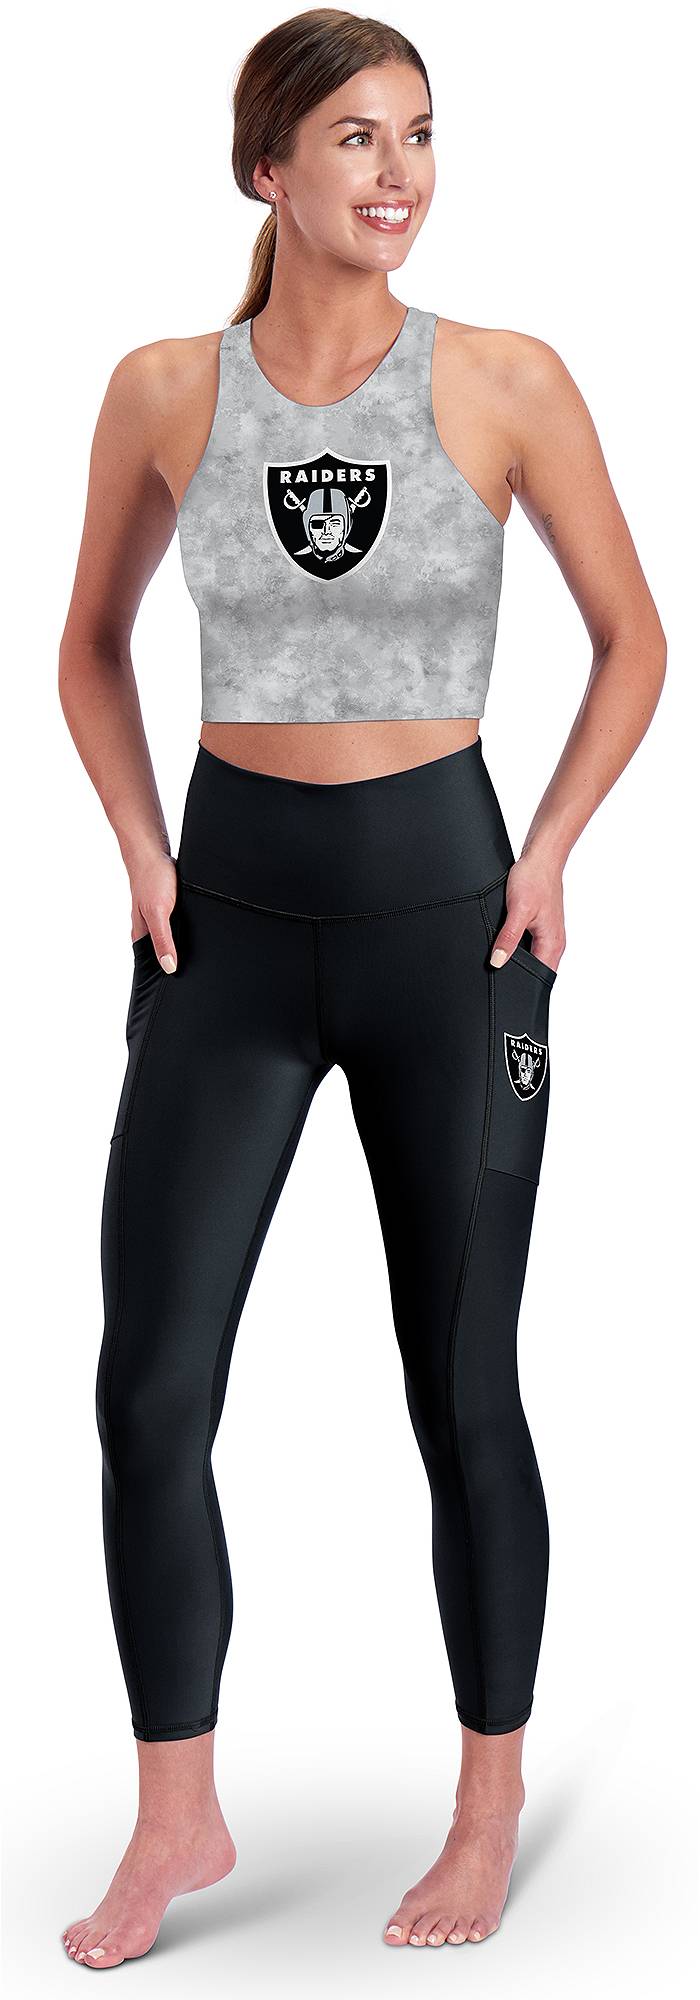 Las Vegas Raiders Concepts Sport Women's Muscle Tank Top & Pants